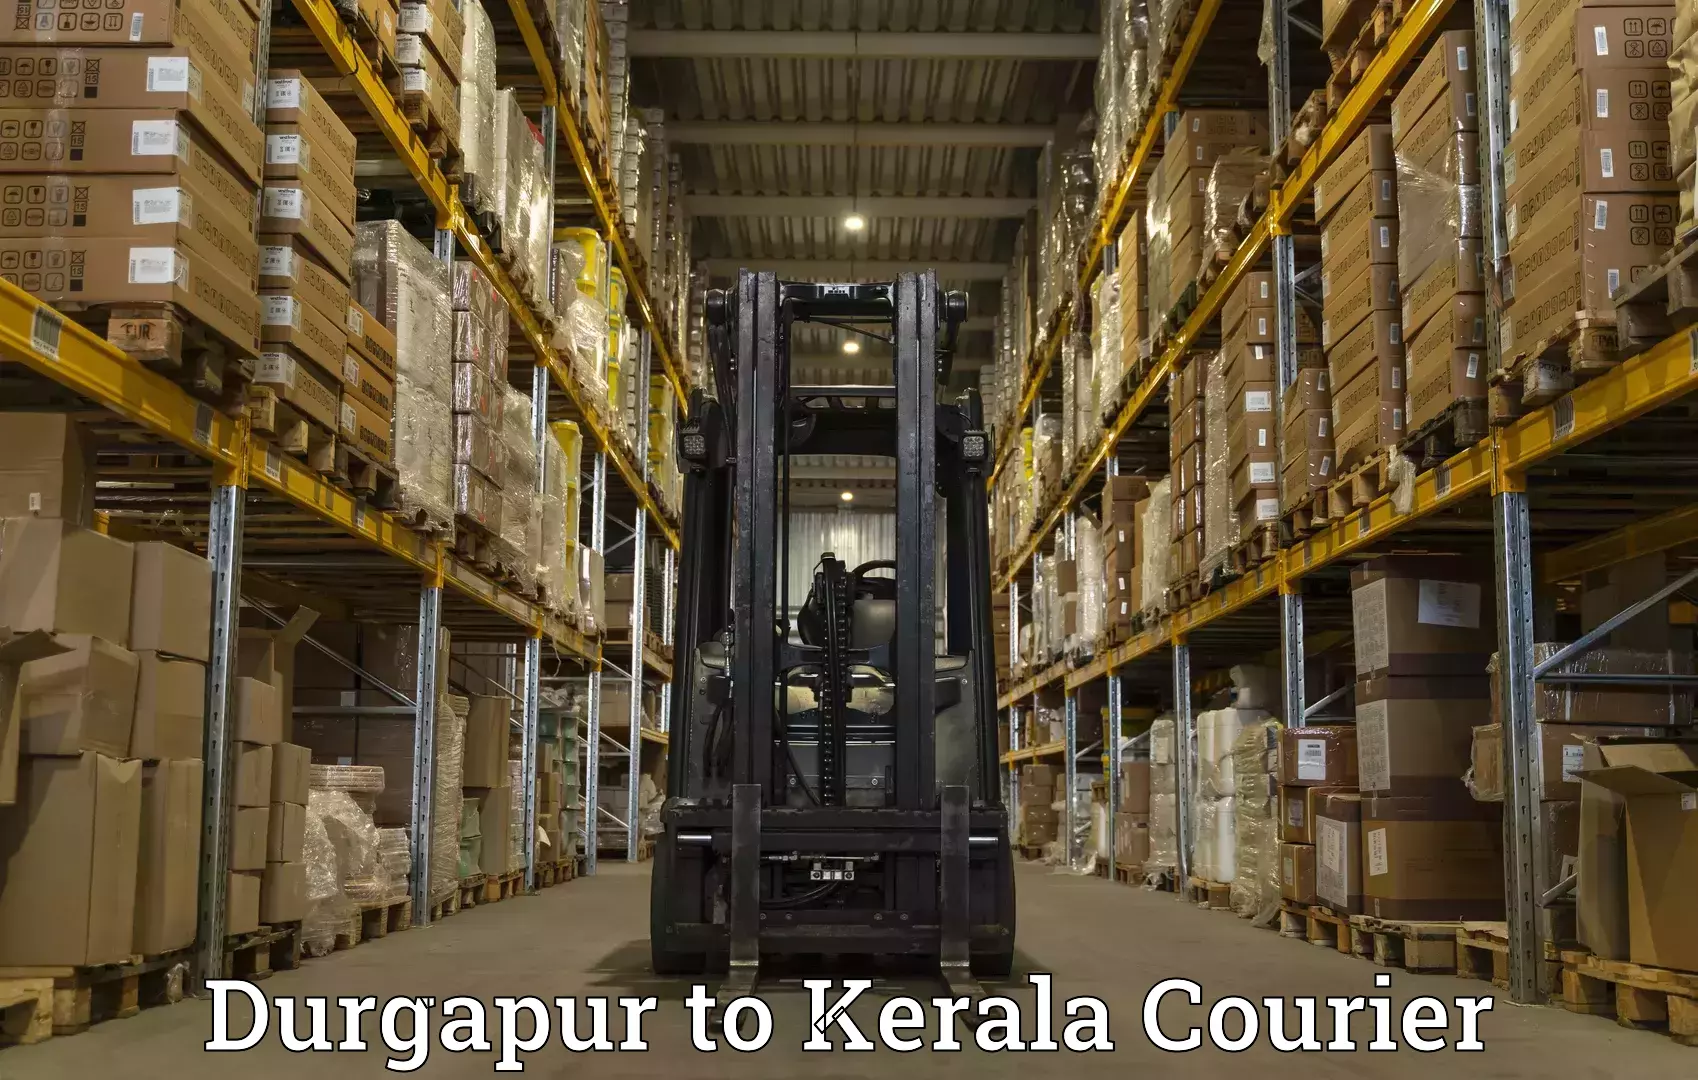 International parcel service Durgapur to Nallepilly